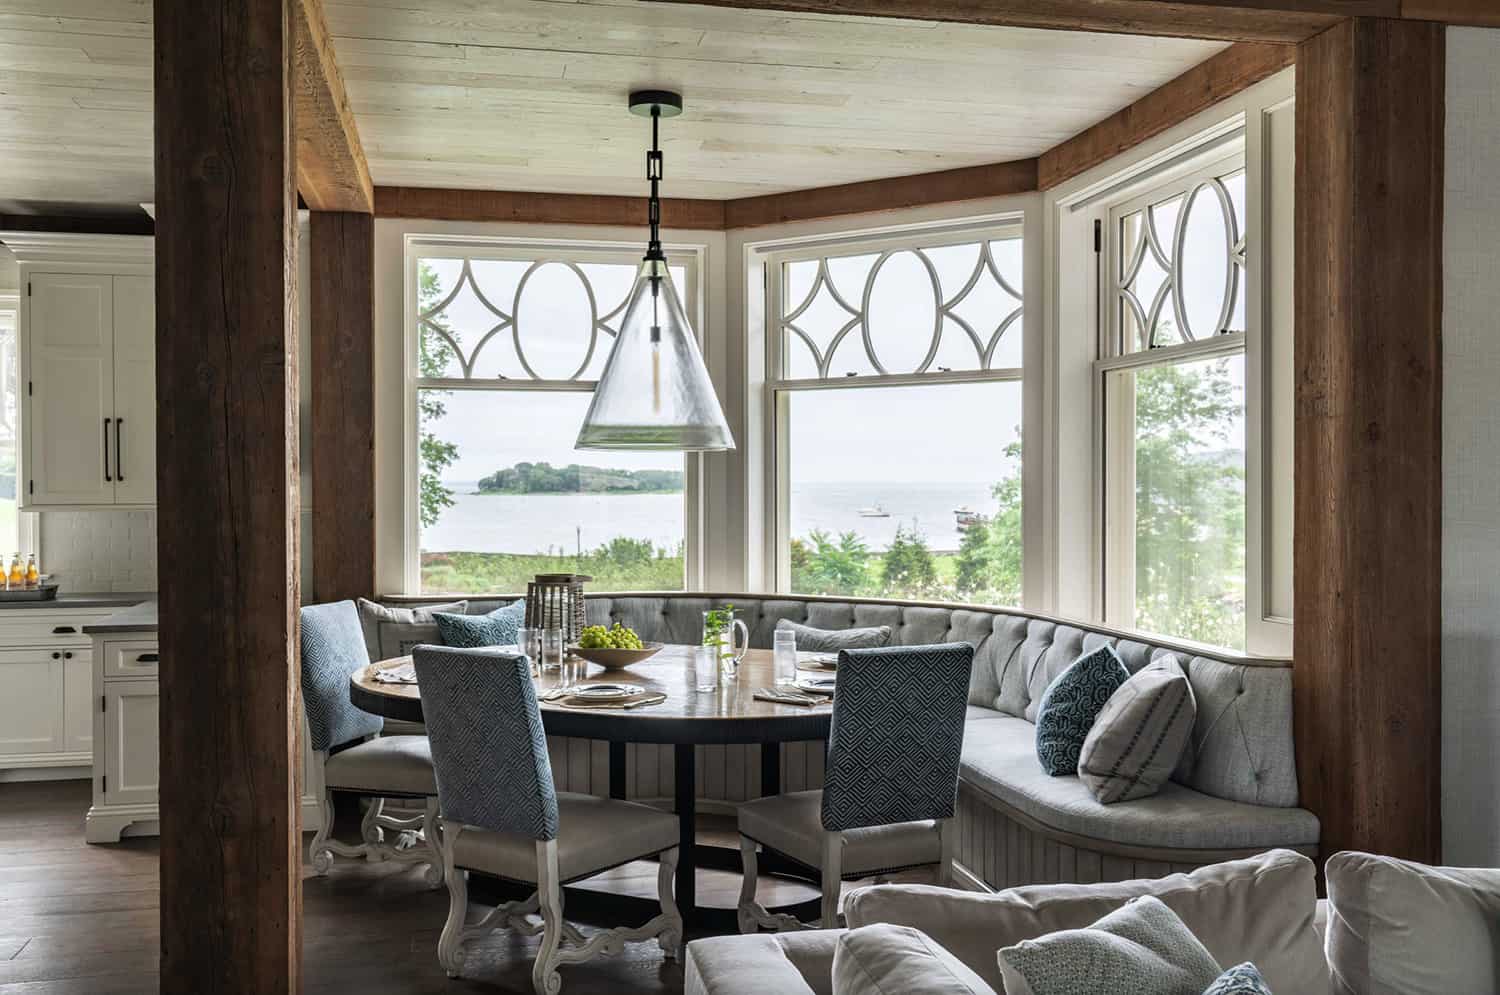 beach-style-kitchen-dining-banquette-window-seat